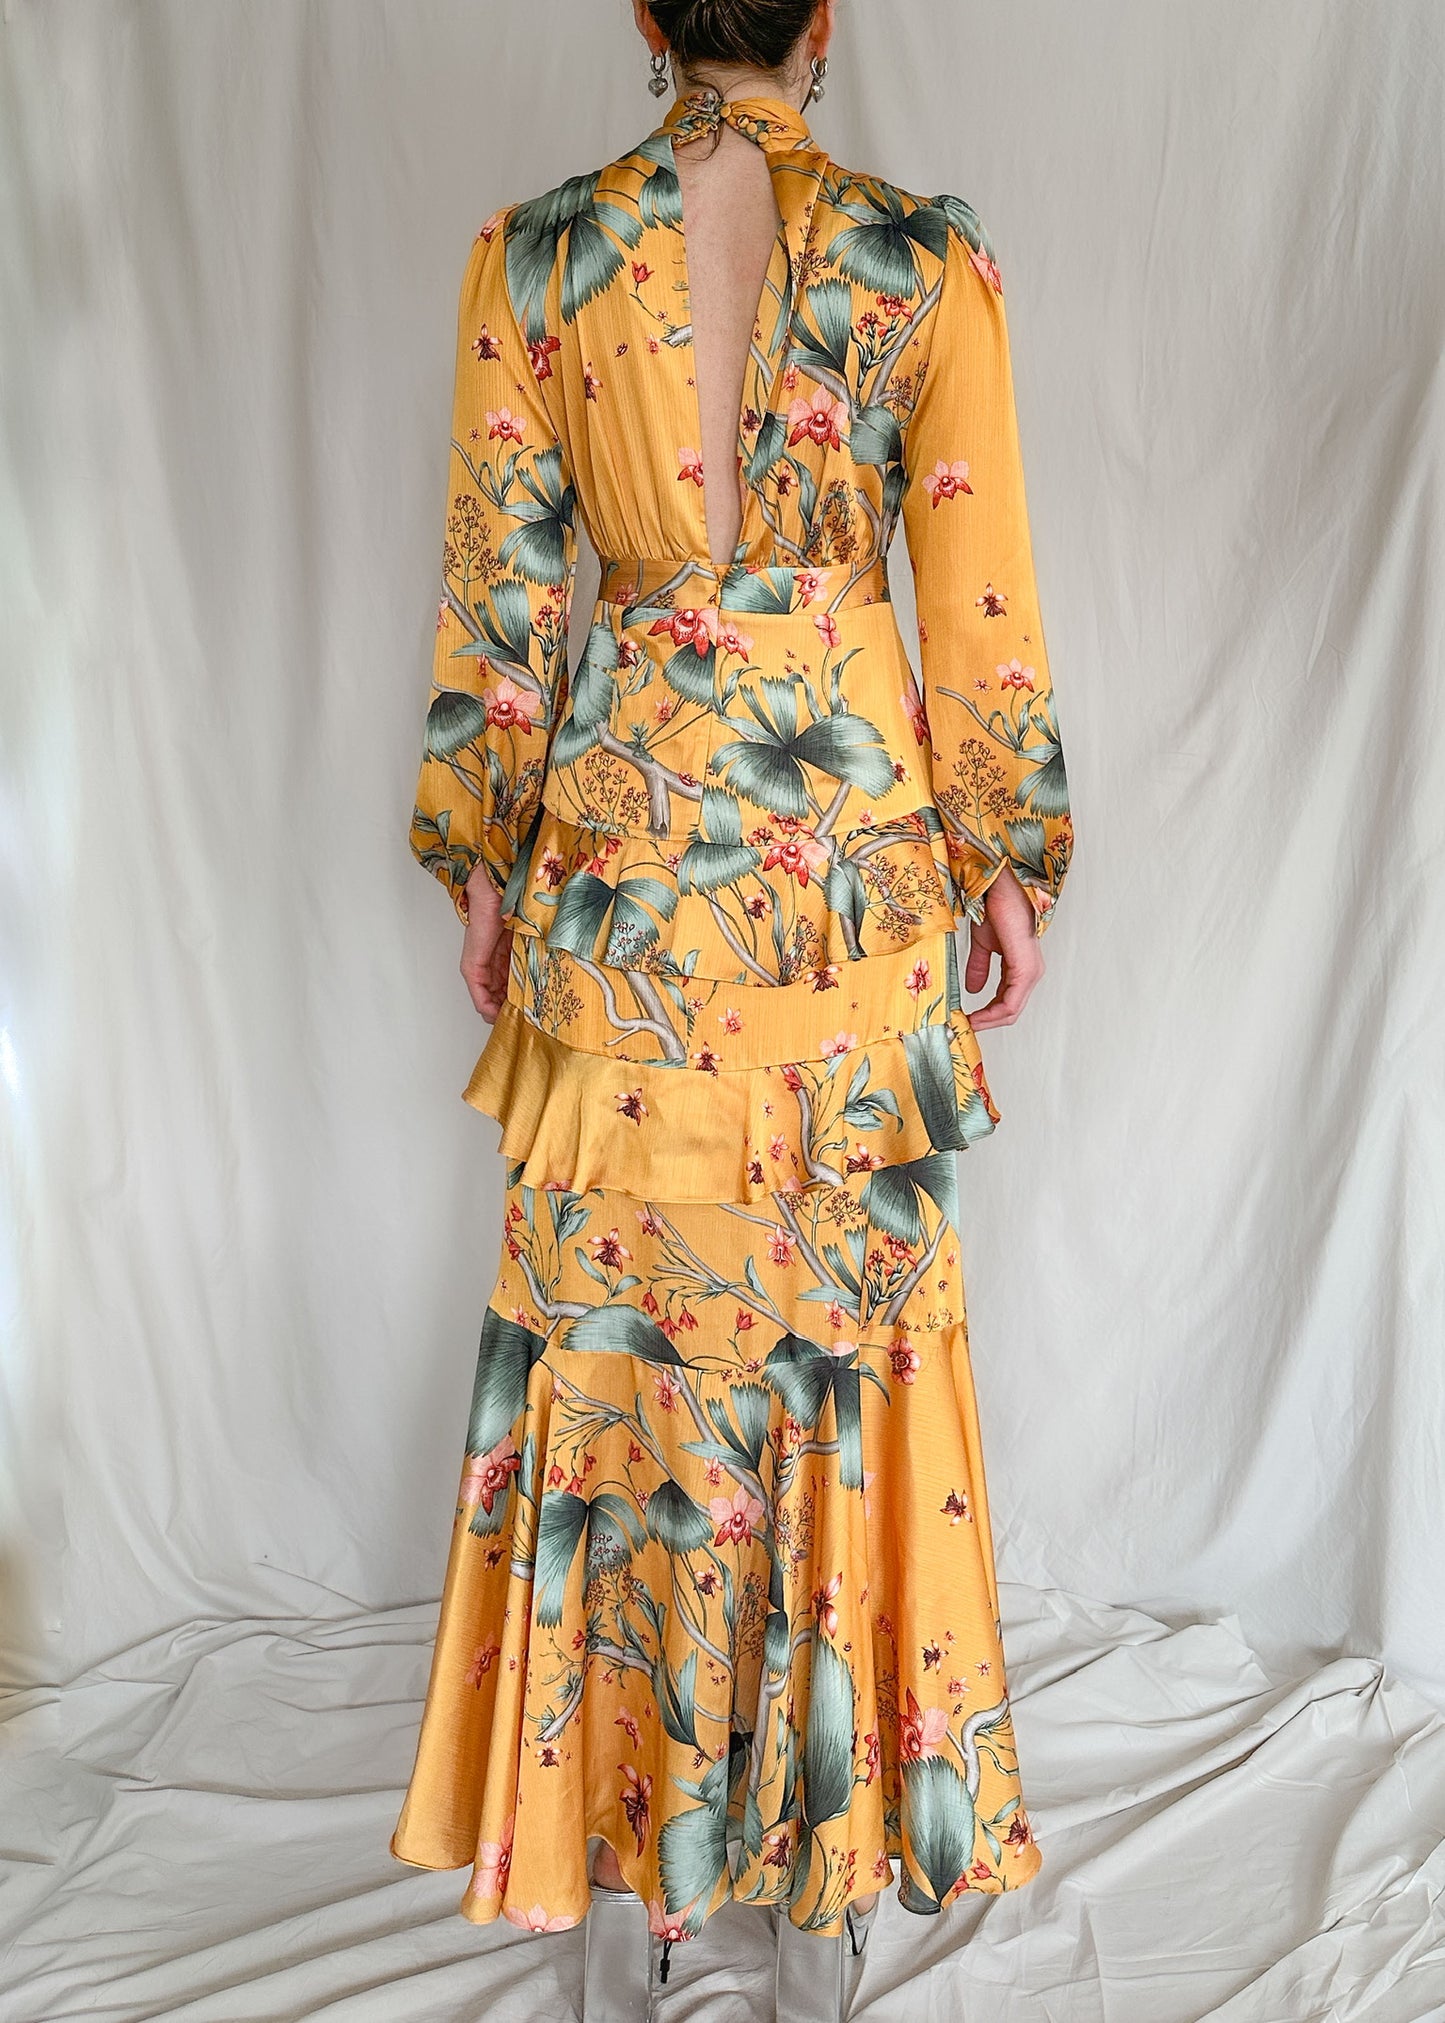 Johanna Ortiz x H&M Yellow Floral Maxi Dress Size 4